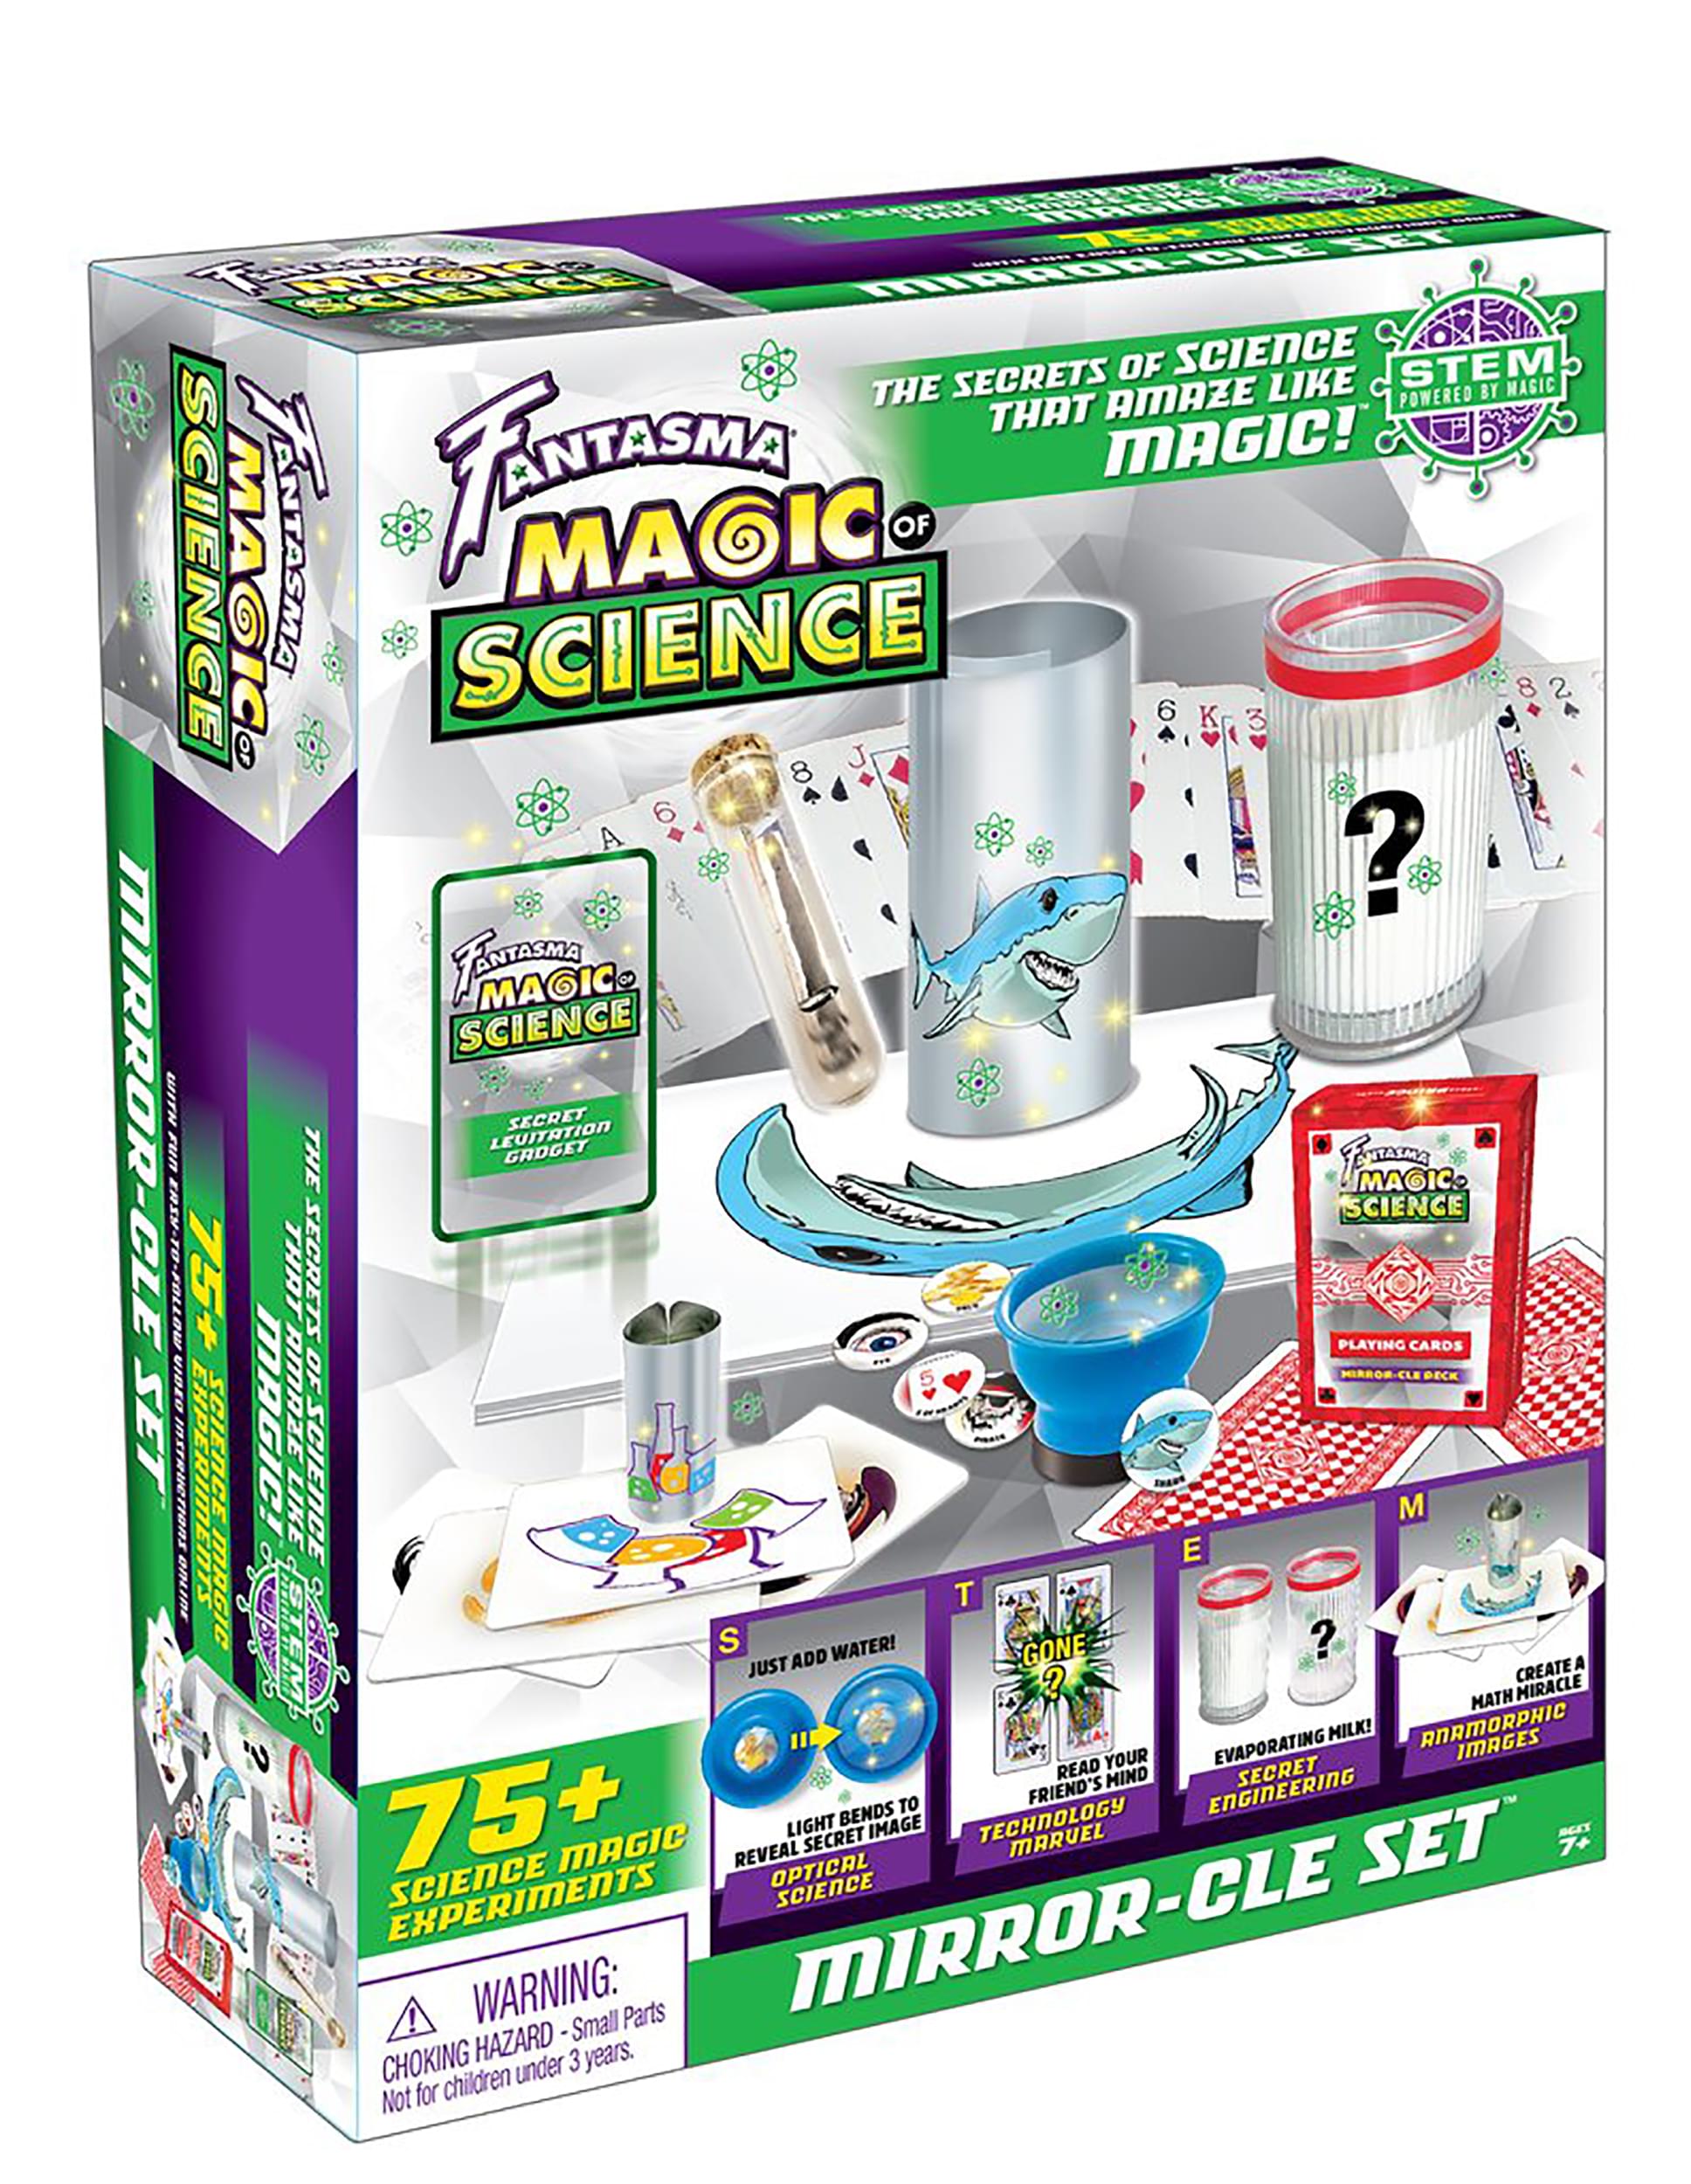 Fantasma Magic Of Science STEM Based Mirror-cle Magic Set , 75+ Experiments